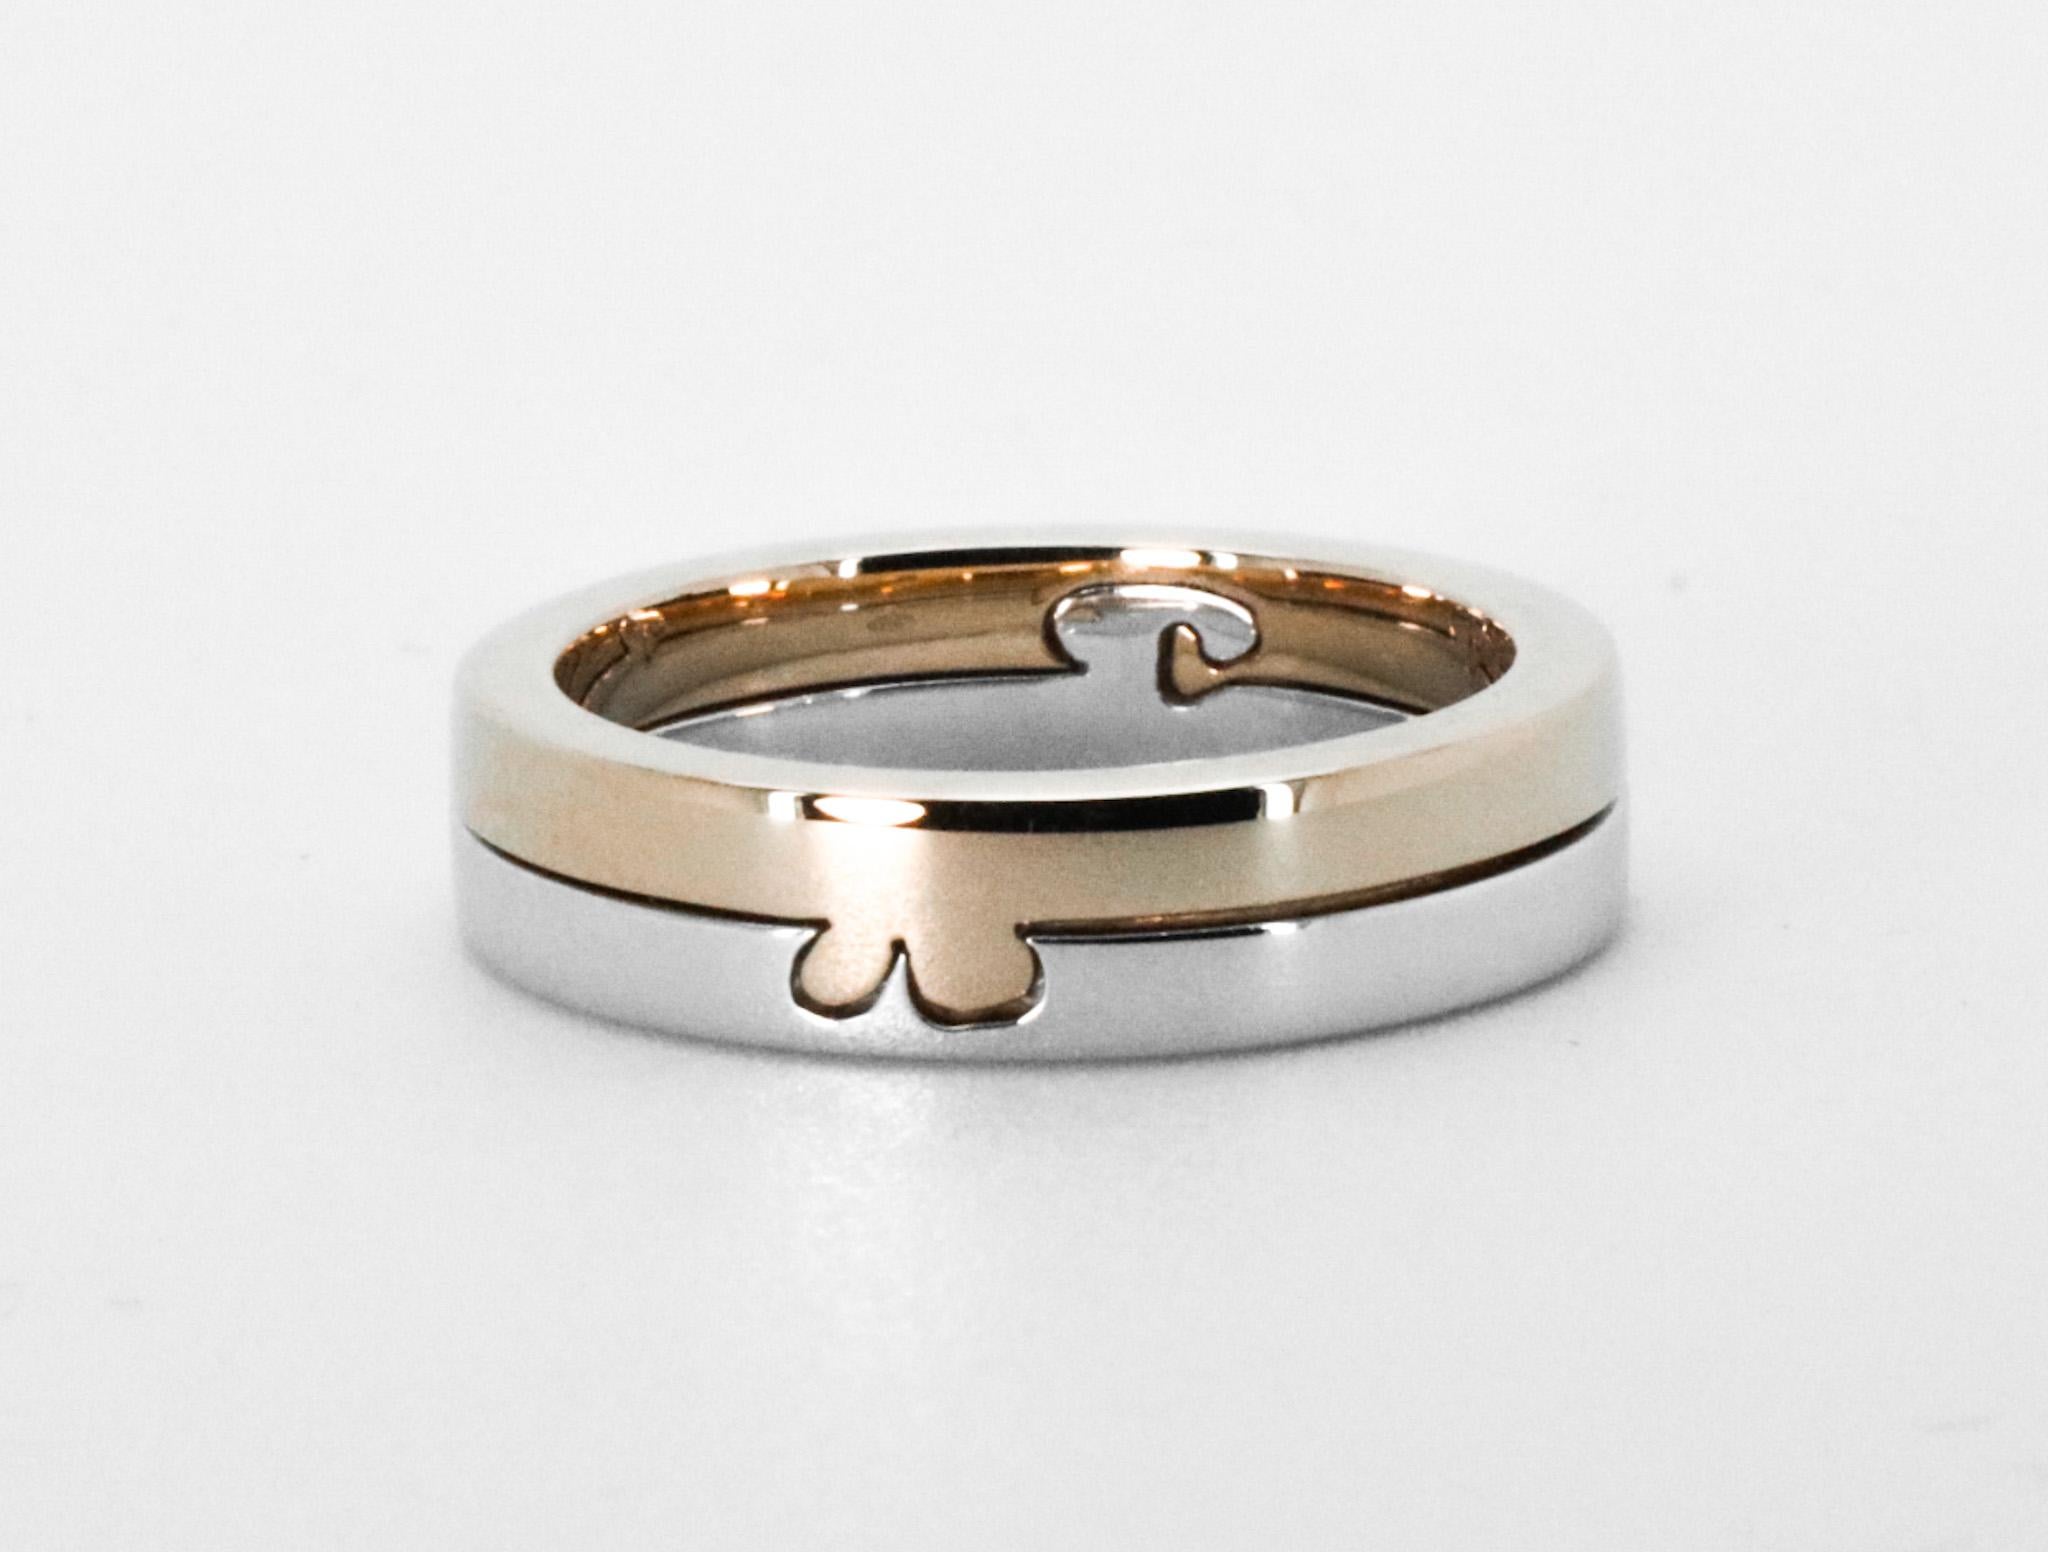 Women's or Men's Bespoke 18k Gold Wedding Ring with Interlocking Initials Design For Sale